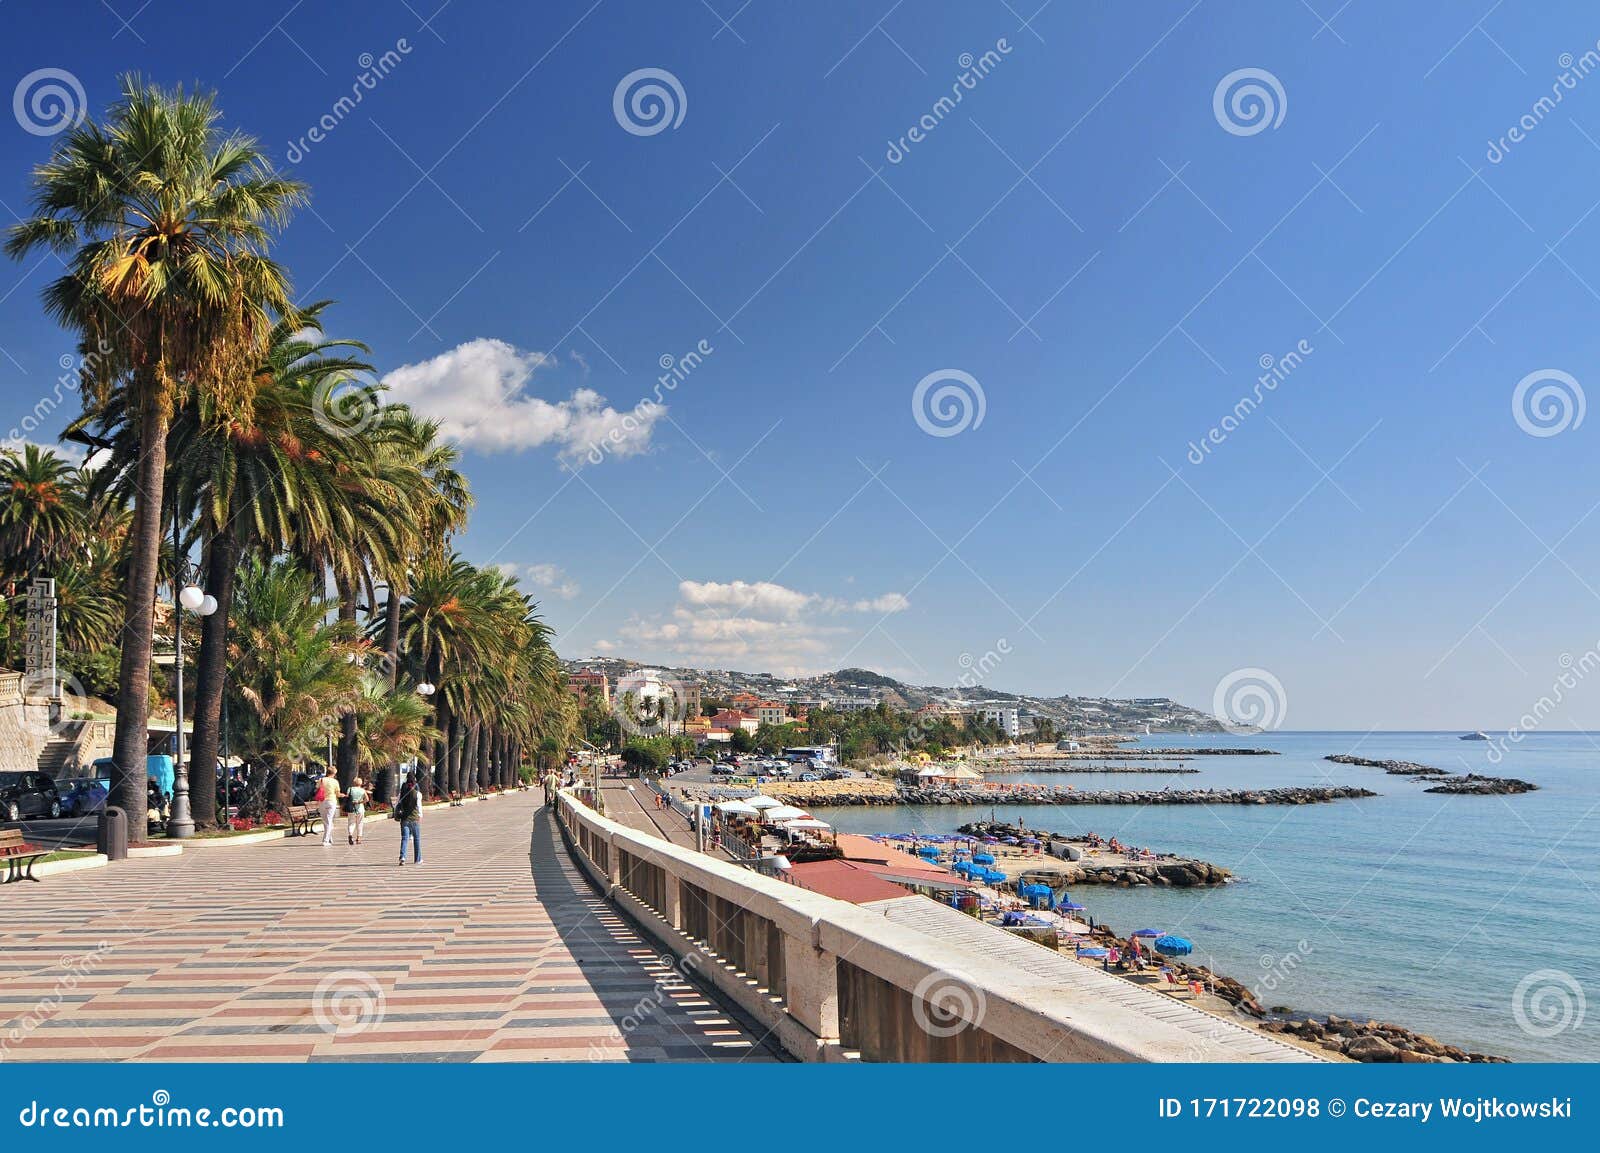 san remo beautiful seaport and promenade in italy